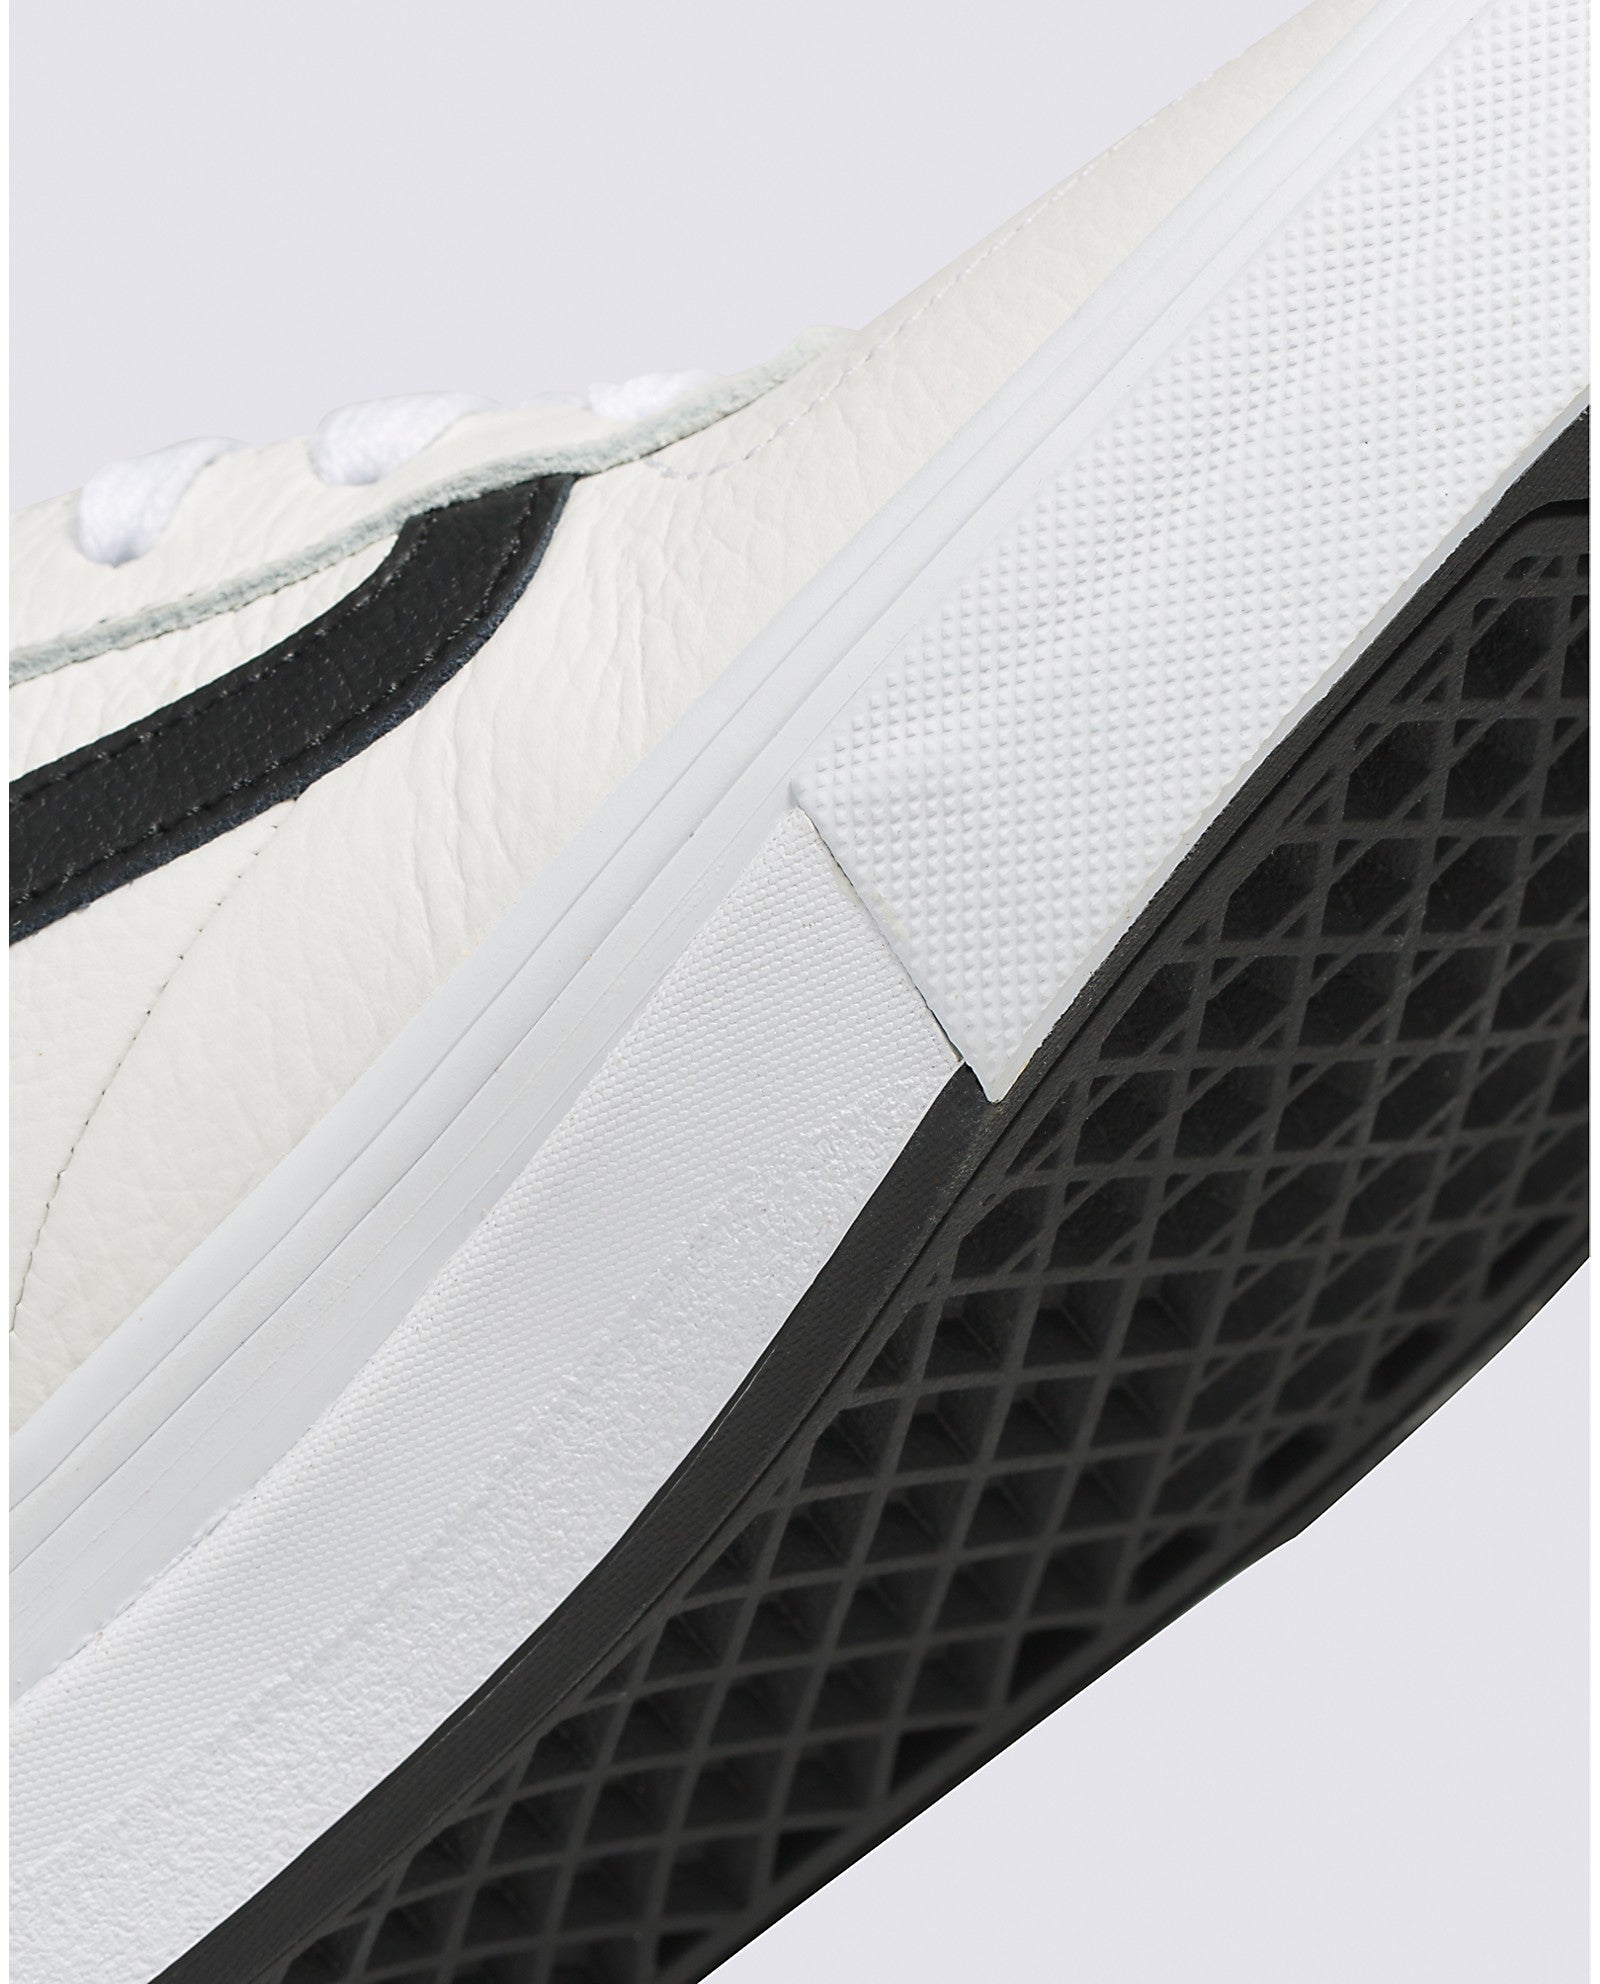 True White Leather Kyle Walker Vans Skate Shoe Detail